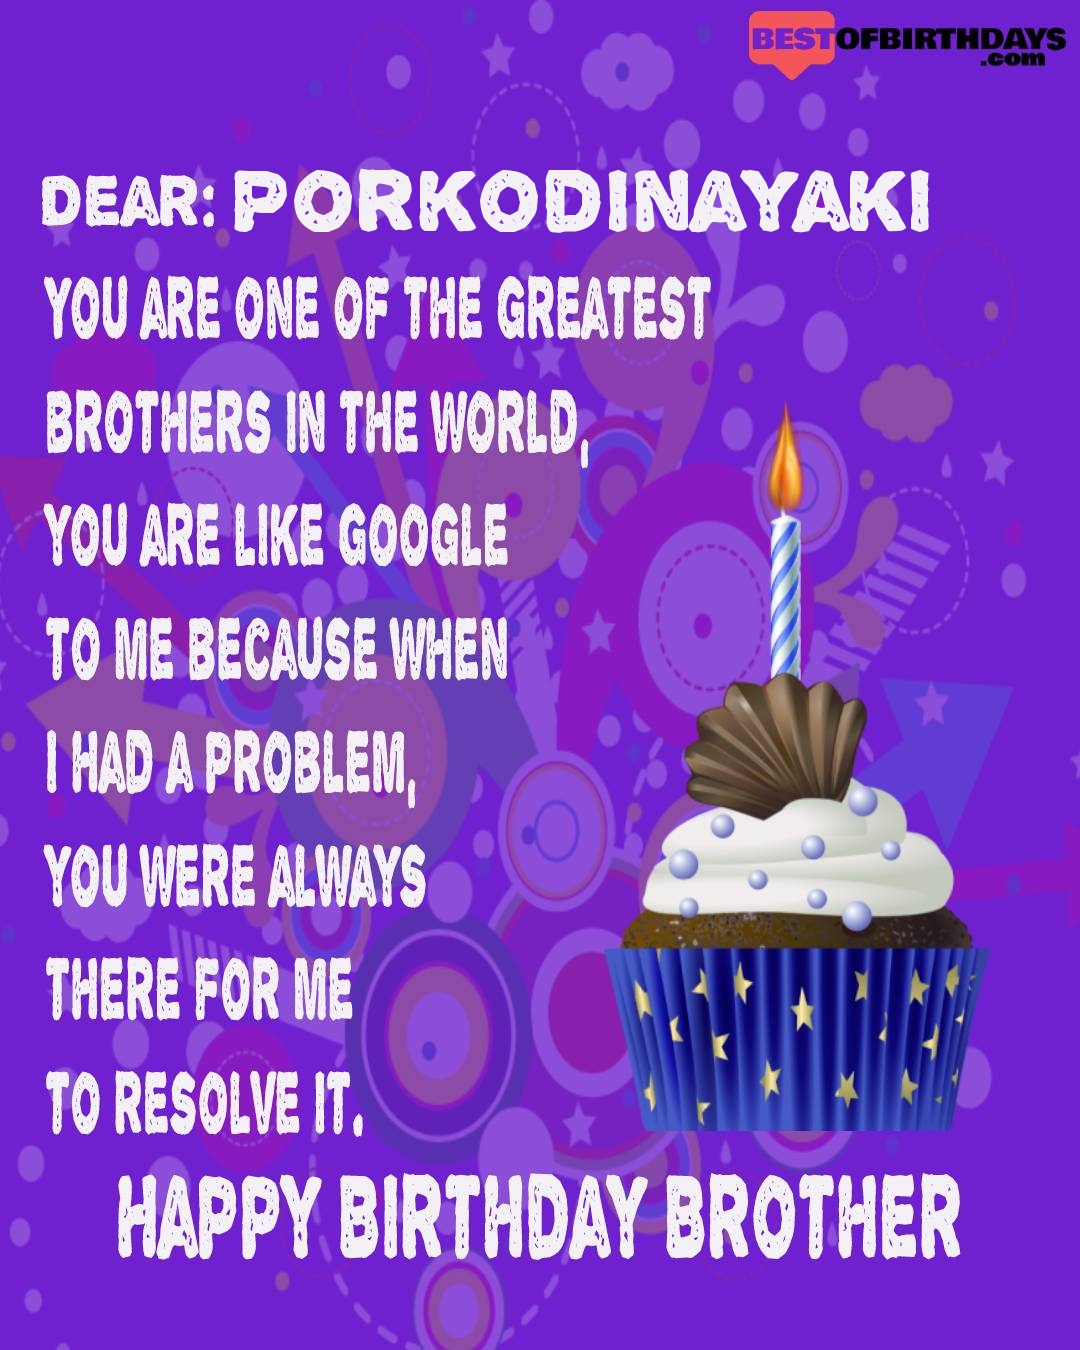 Happy birthday porkodinayaki bhai brother bro